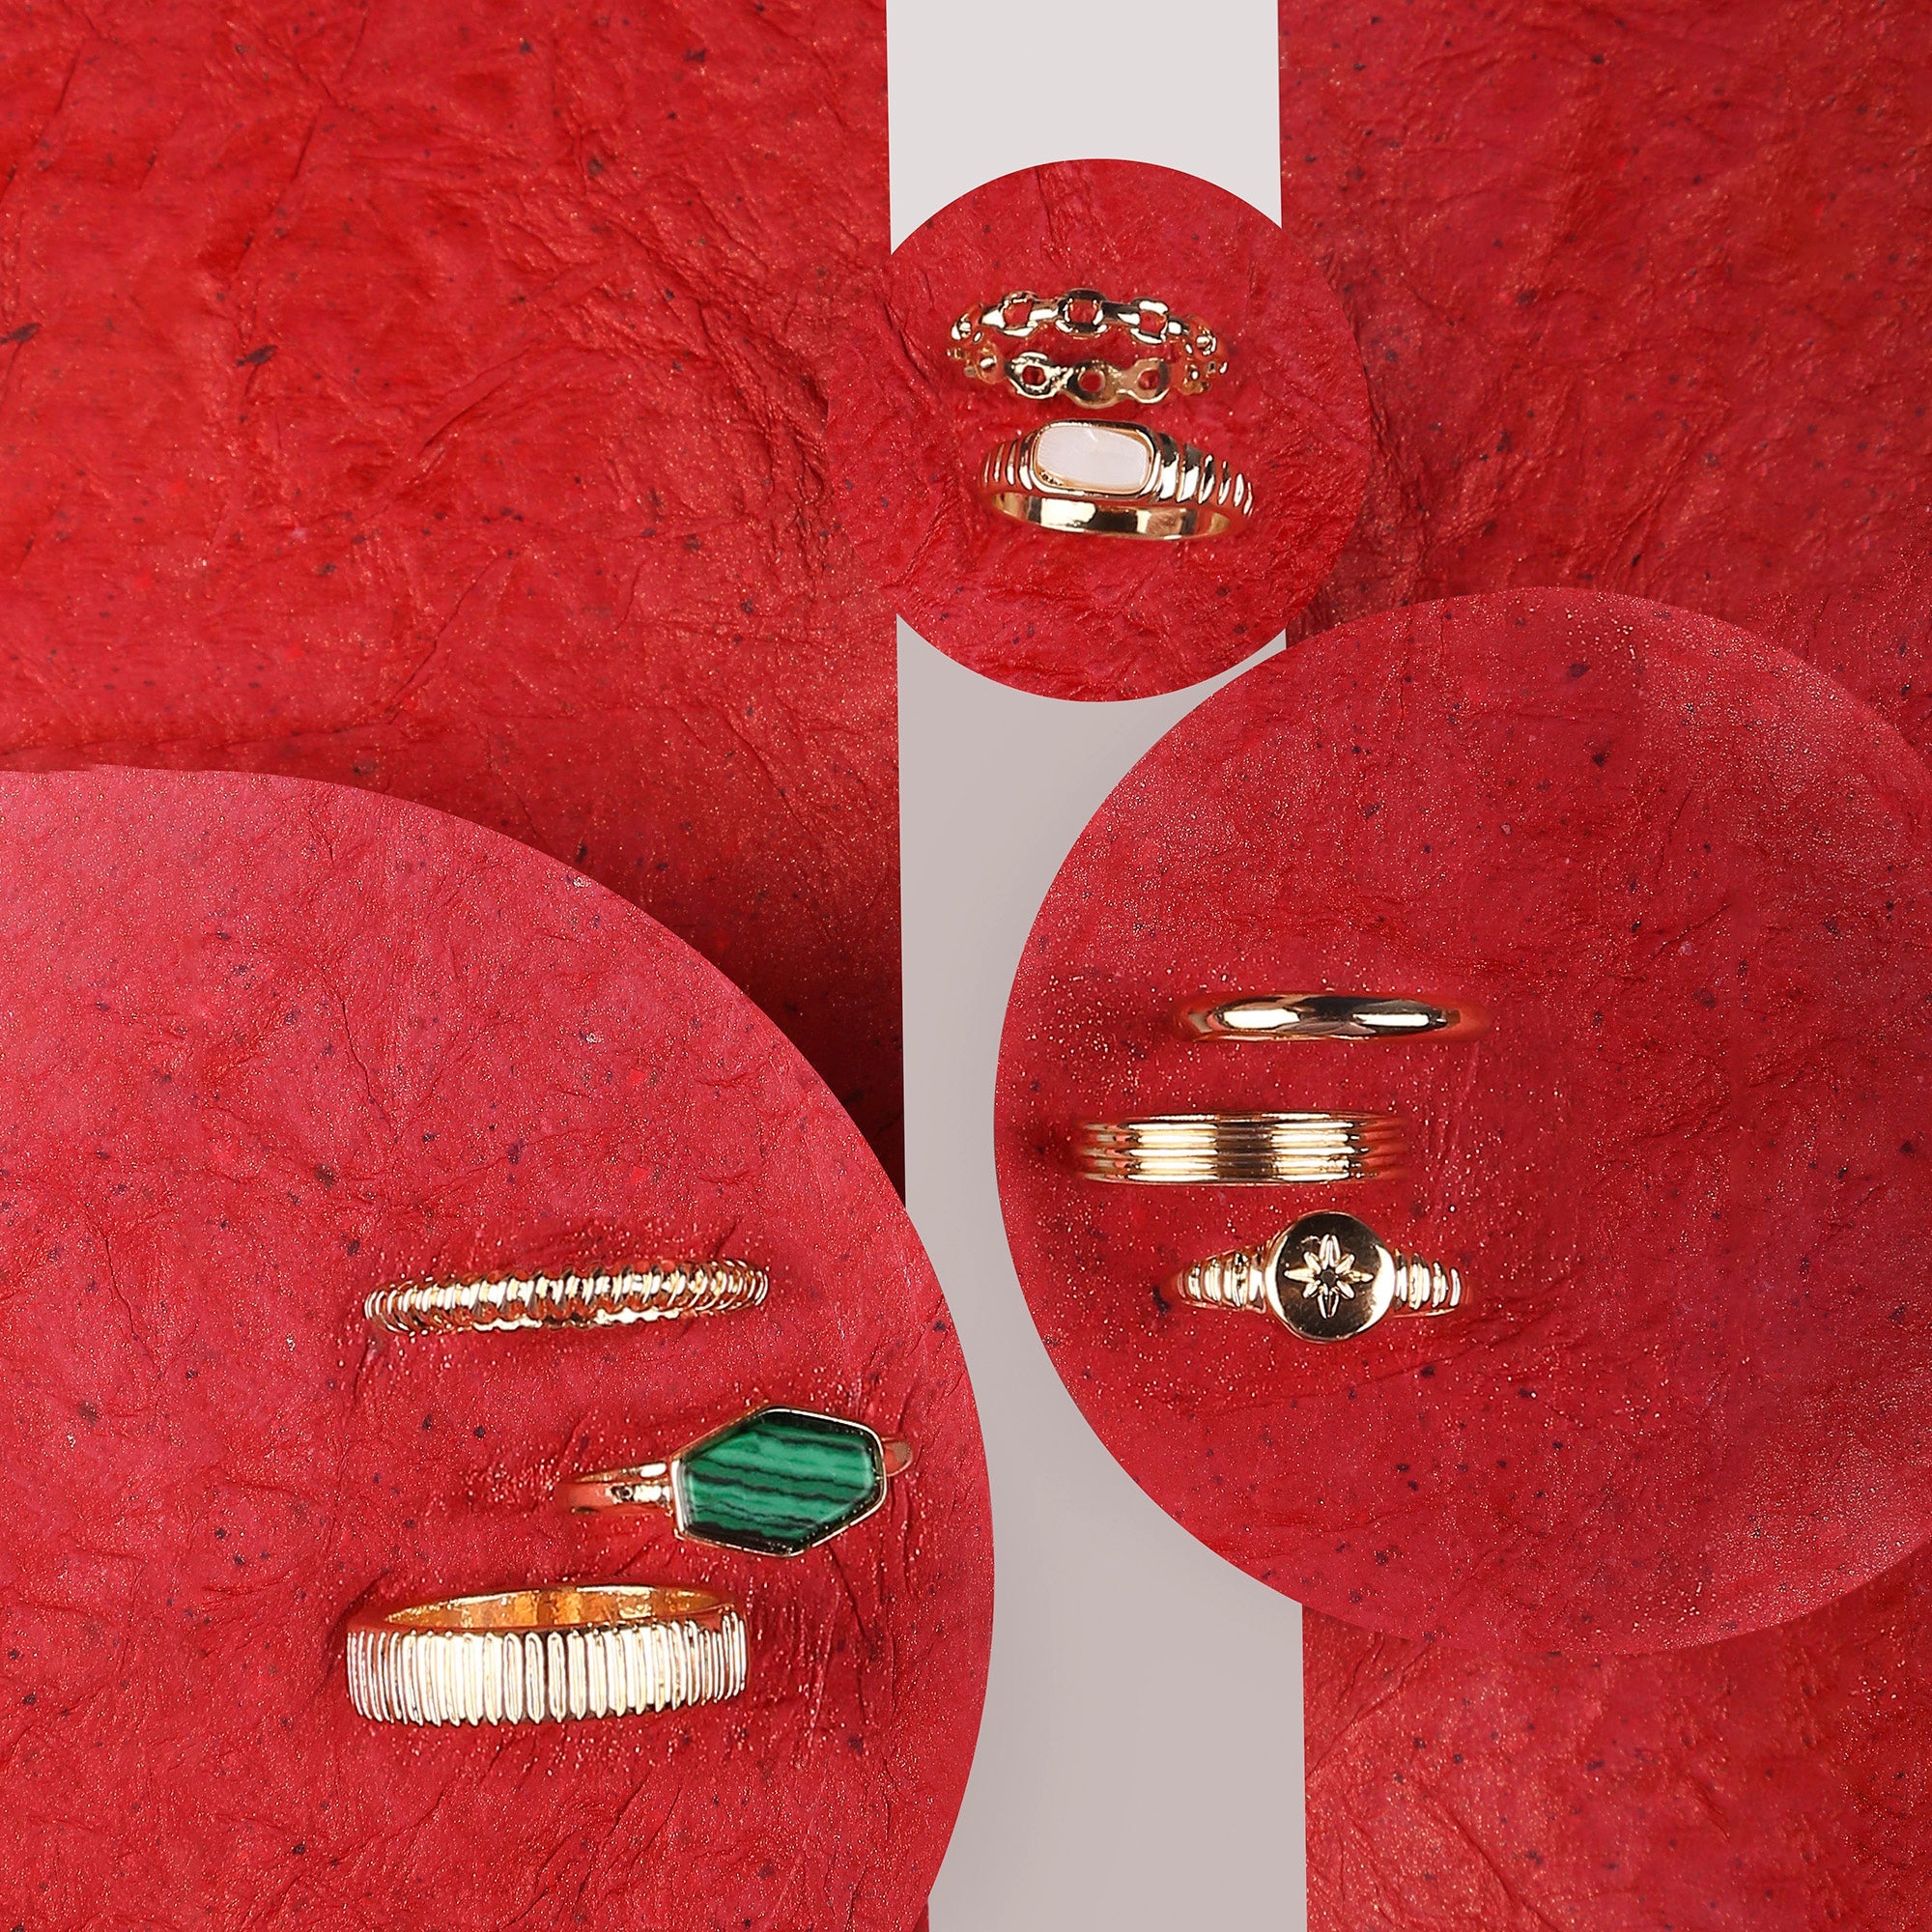 Accessorize London Women's Green Super Classics Set of 8 Mixed Ring Pack-Medium